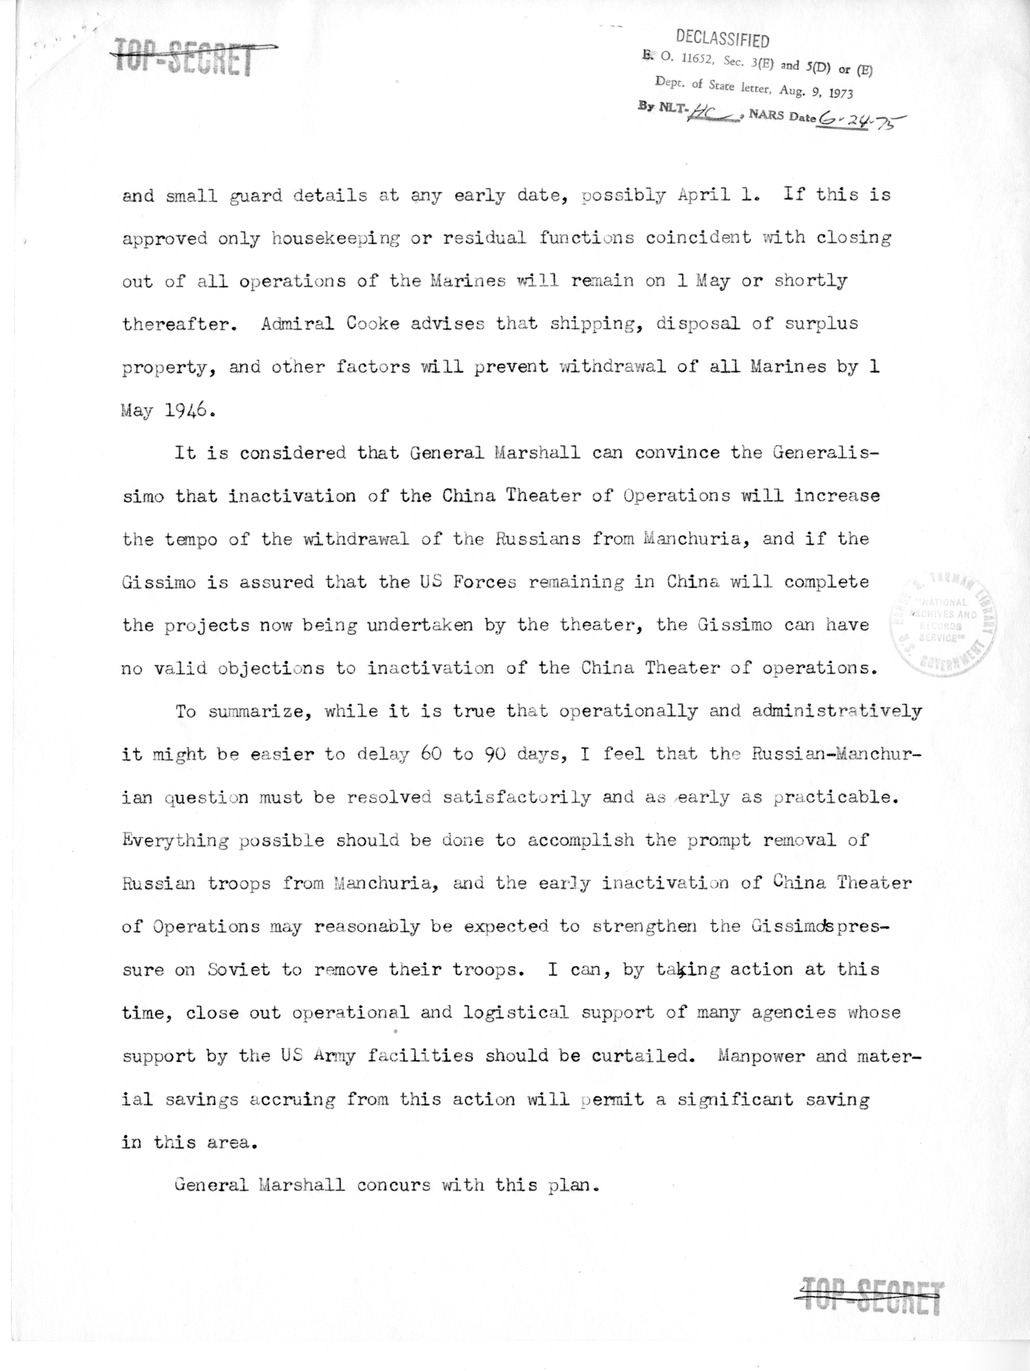 Memorandum from General Alfred Wedemeyer to General Dwight Eisenhower